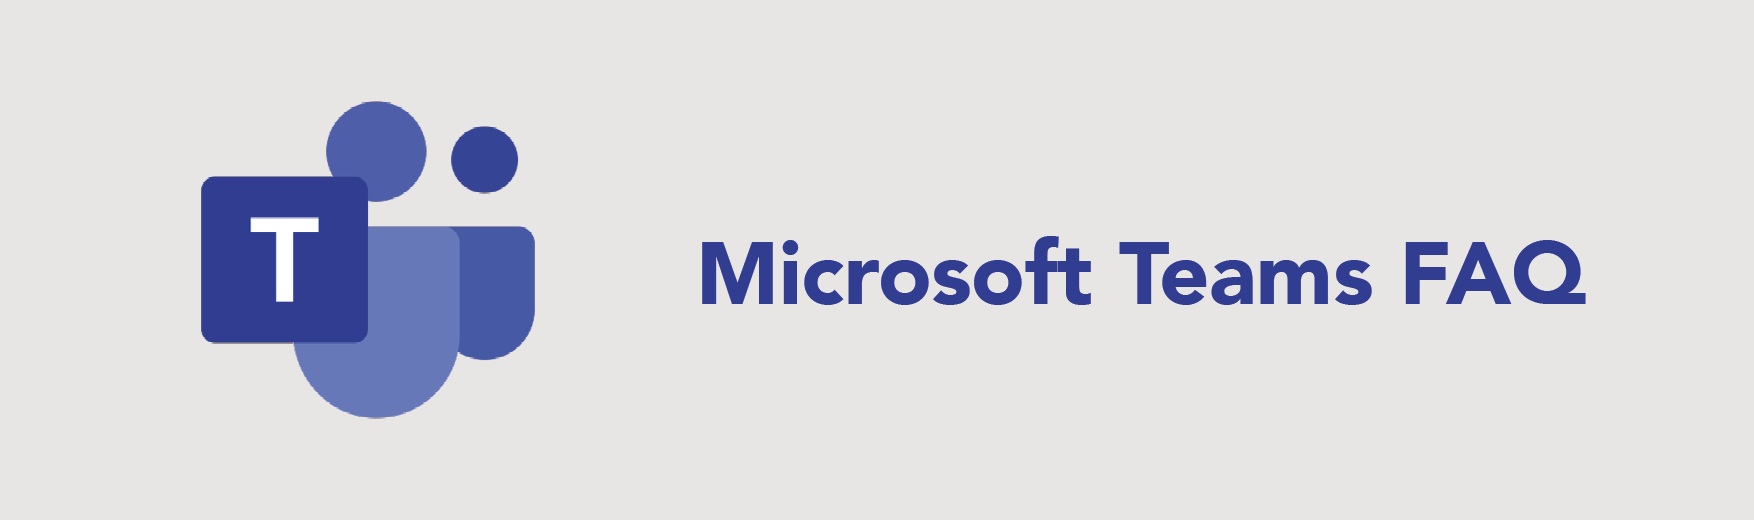 2020-09-28 Microsoft Teams FAQ